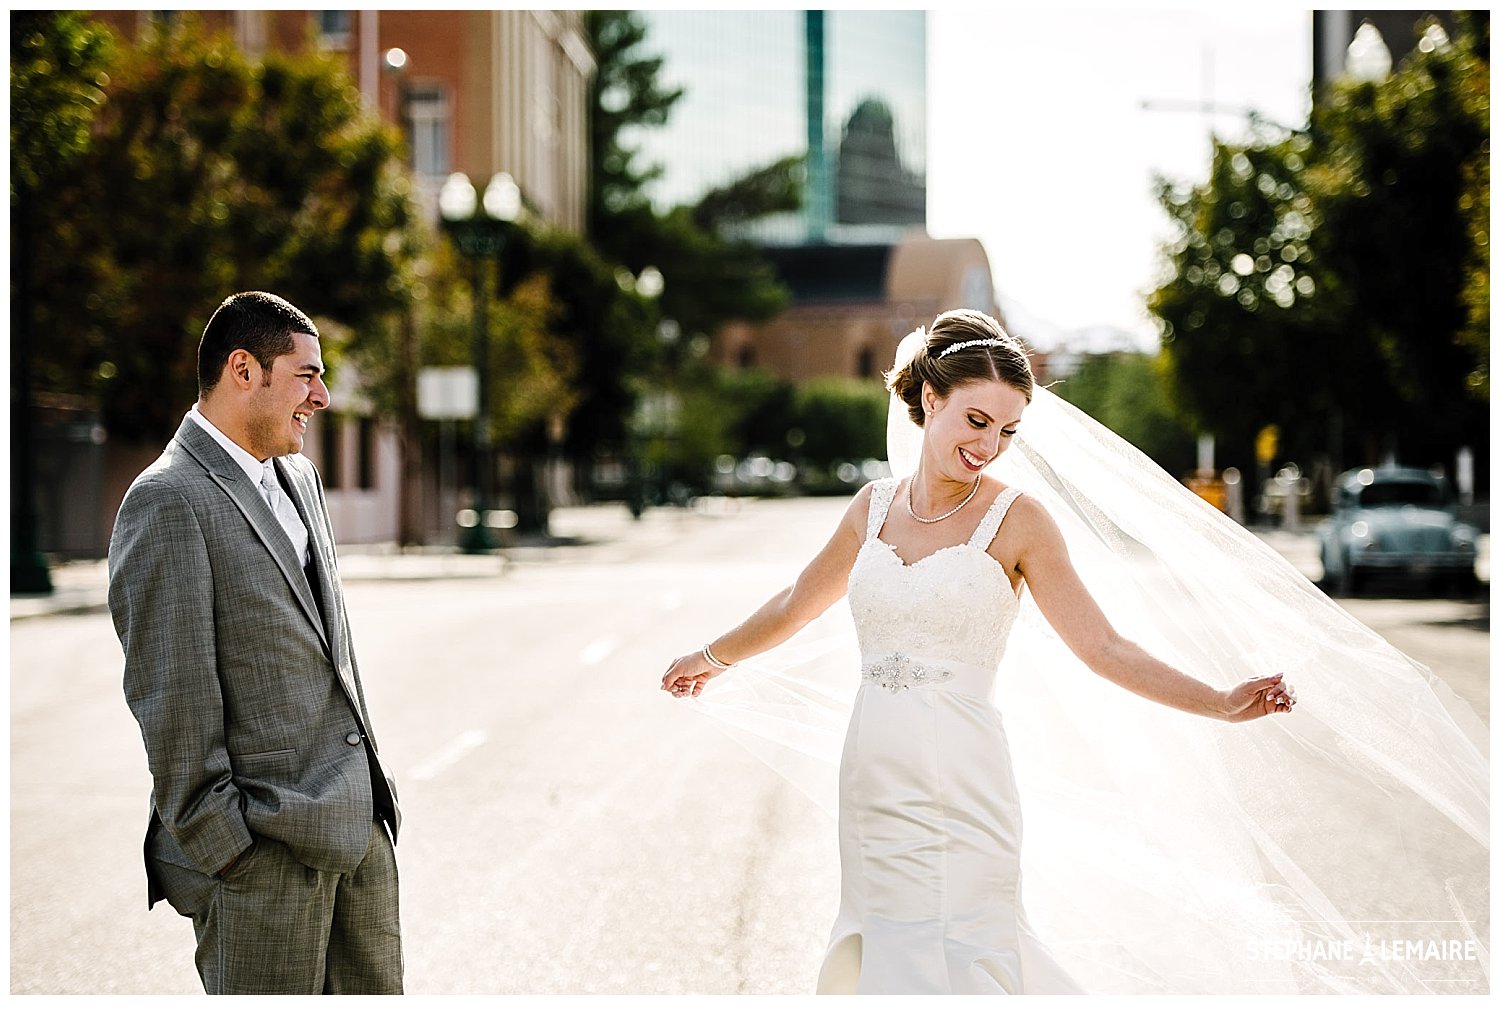 Bride and groom dance in El Paso street.